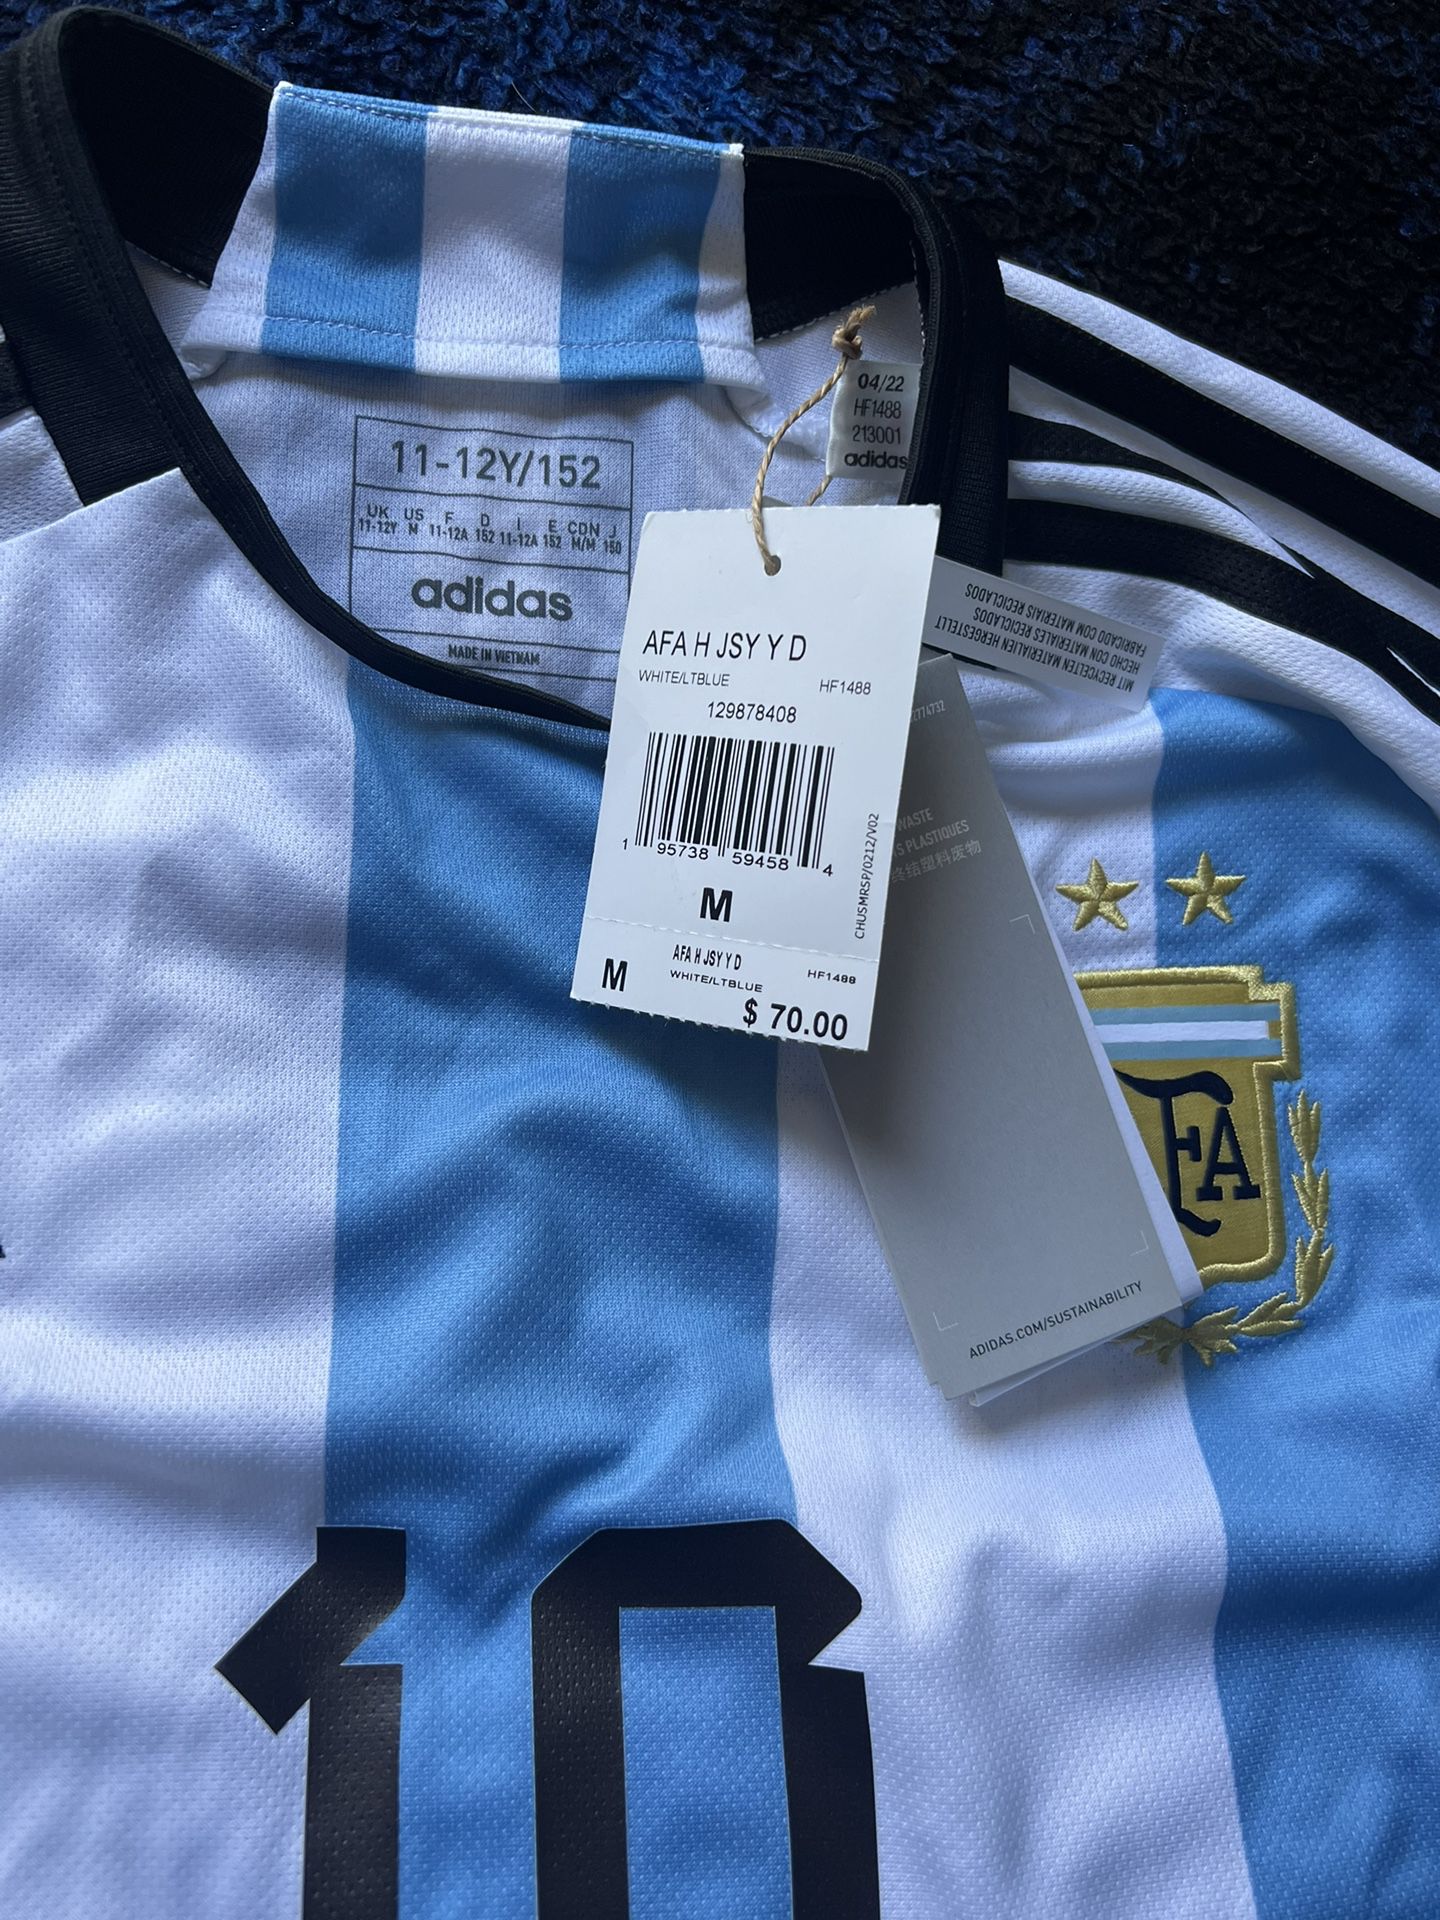 messi jersey argentina 2022